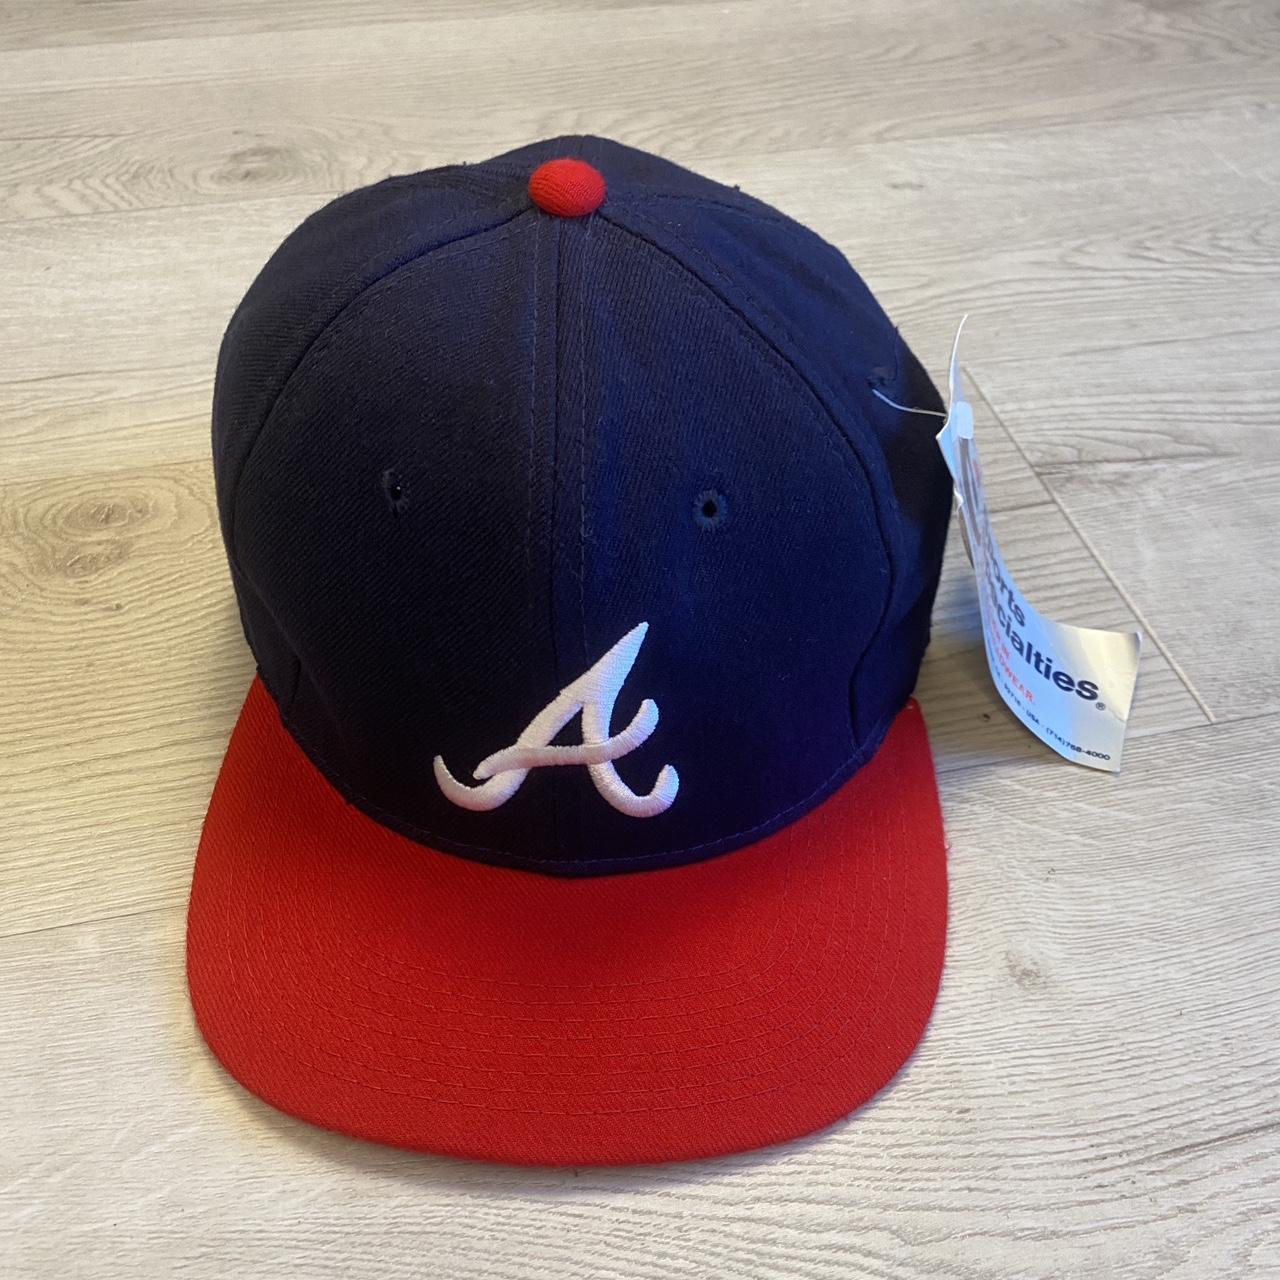 Vintage Atlanta Braves Fitted Hat Sports Specialties 7 1/2 MLB